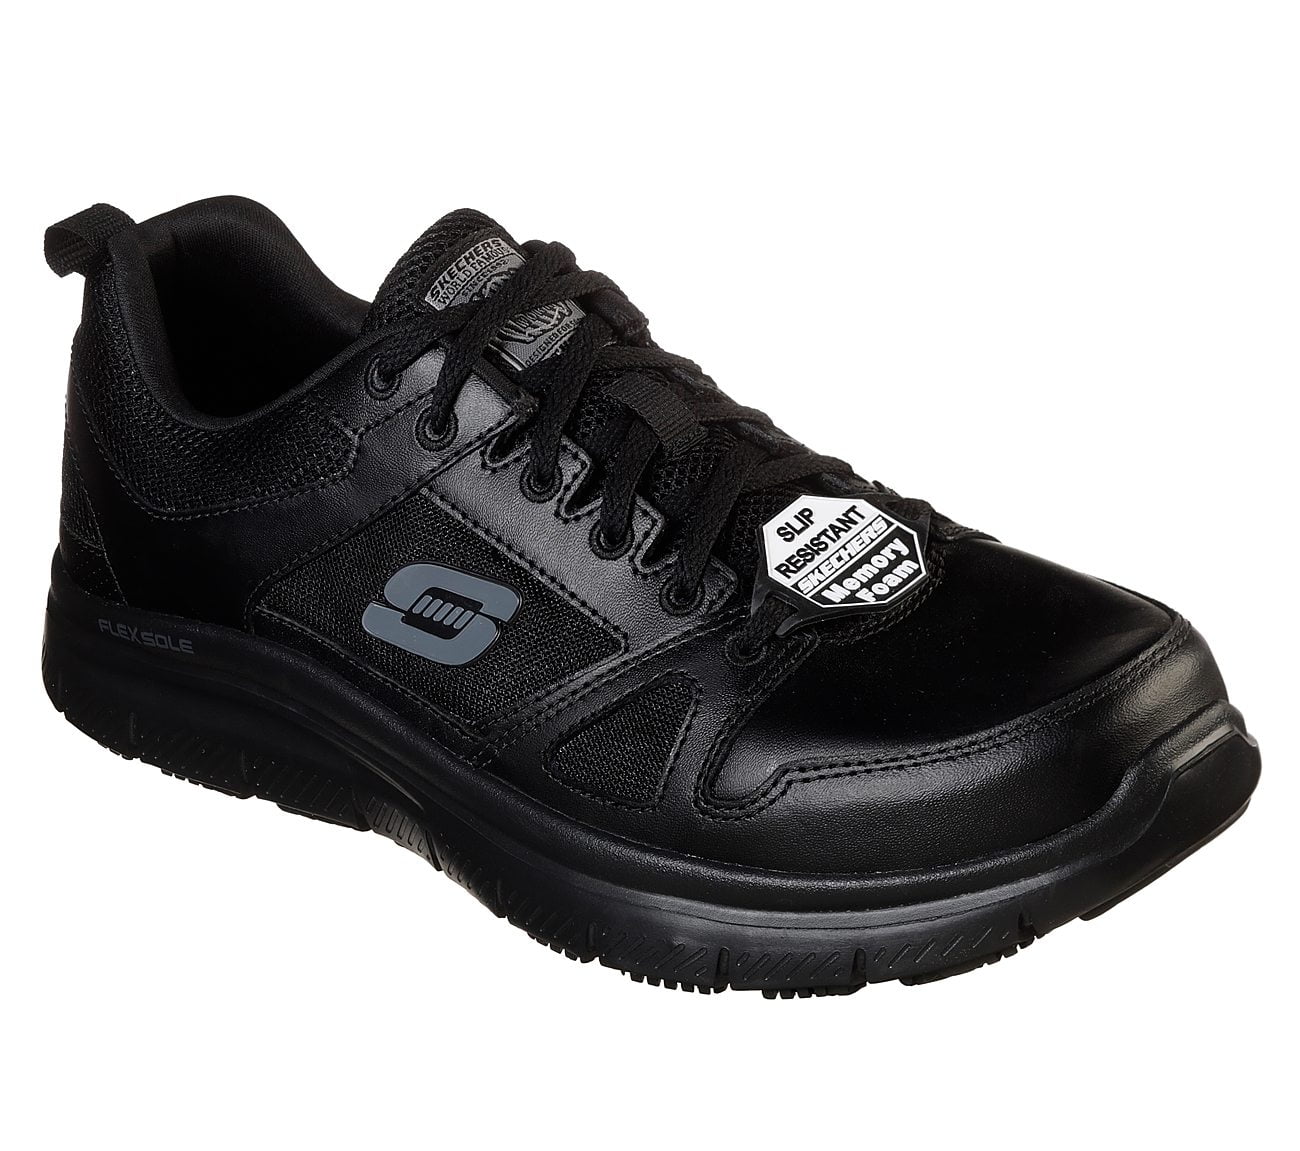 Skechers Men's Flex Advantage SR Work Shoe, Black/Black, 11.5 W US